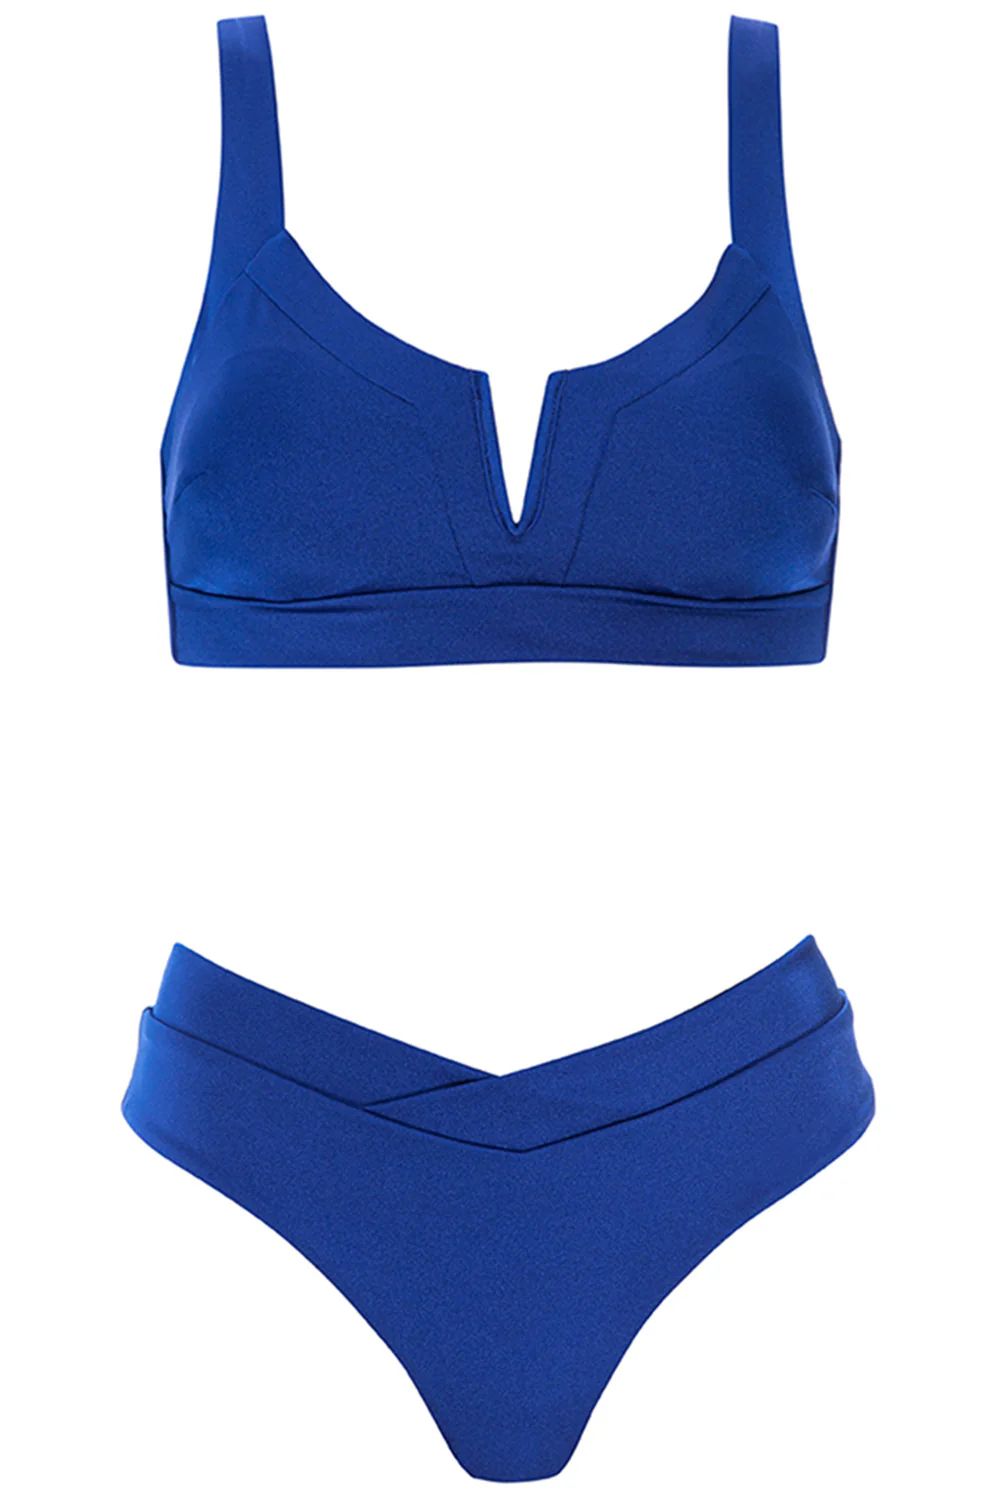 Vista Bikini Blue Set | VETCHY